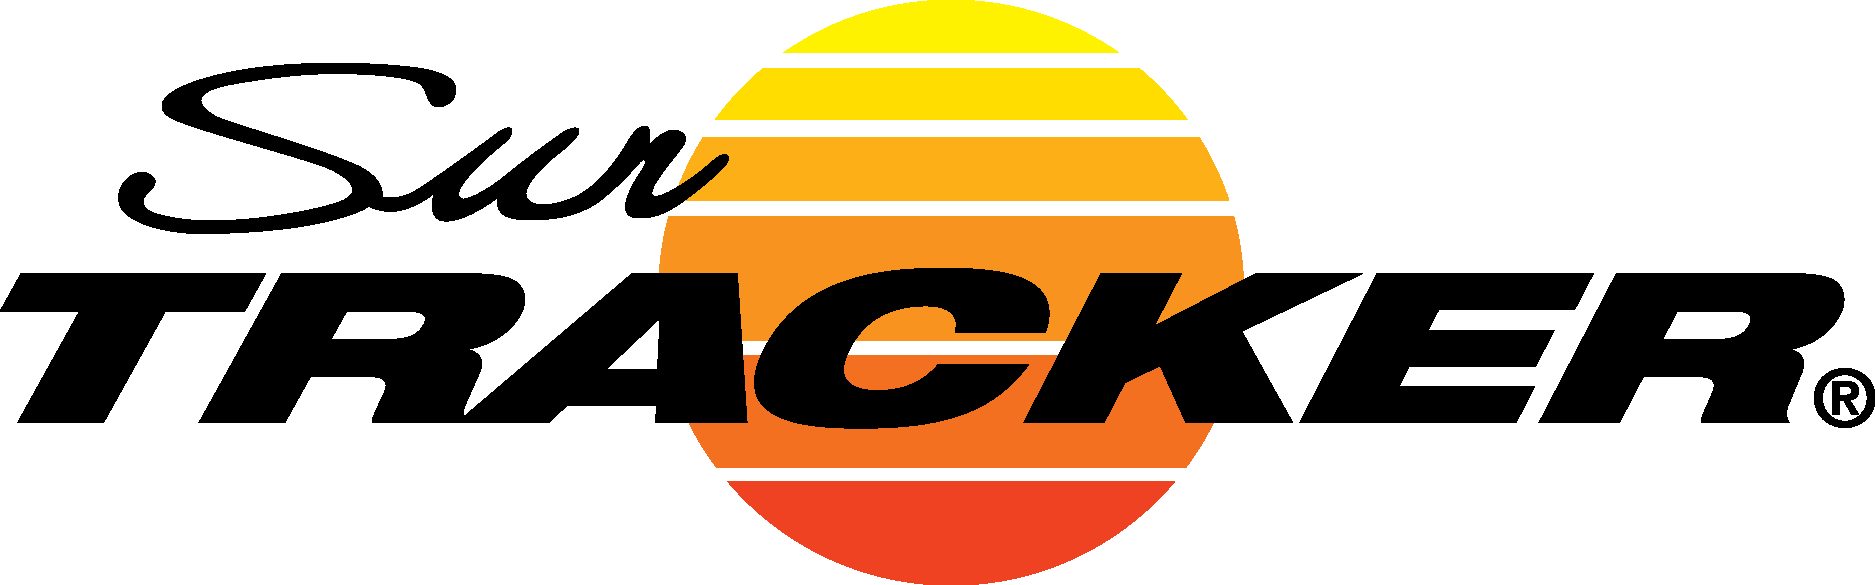 Sun Tracker Logo Vector